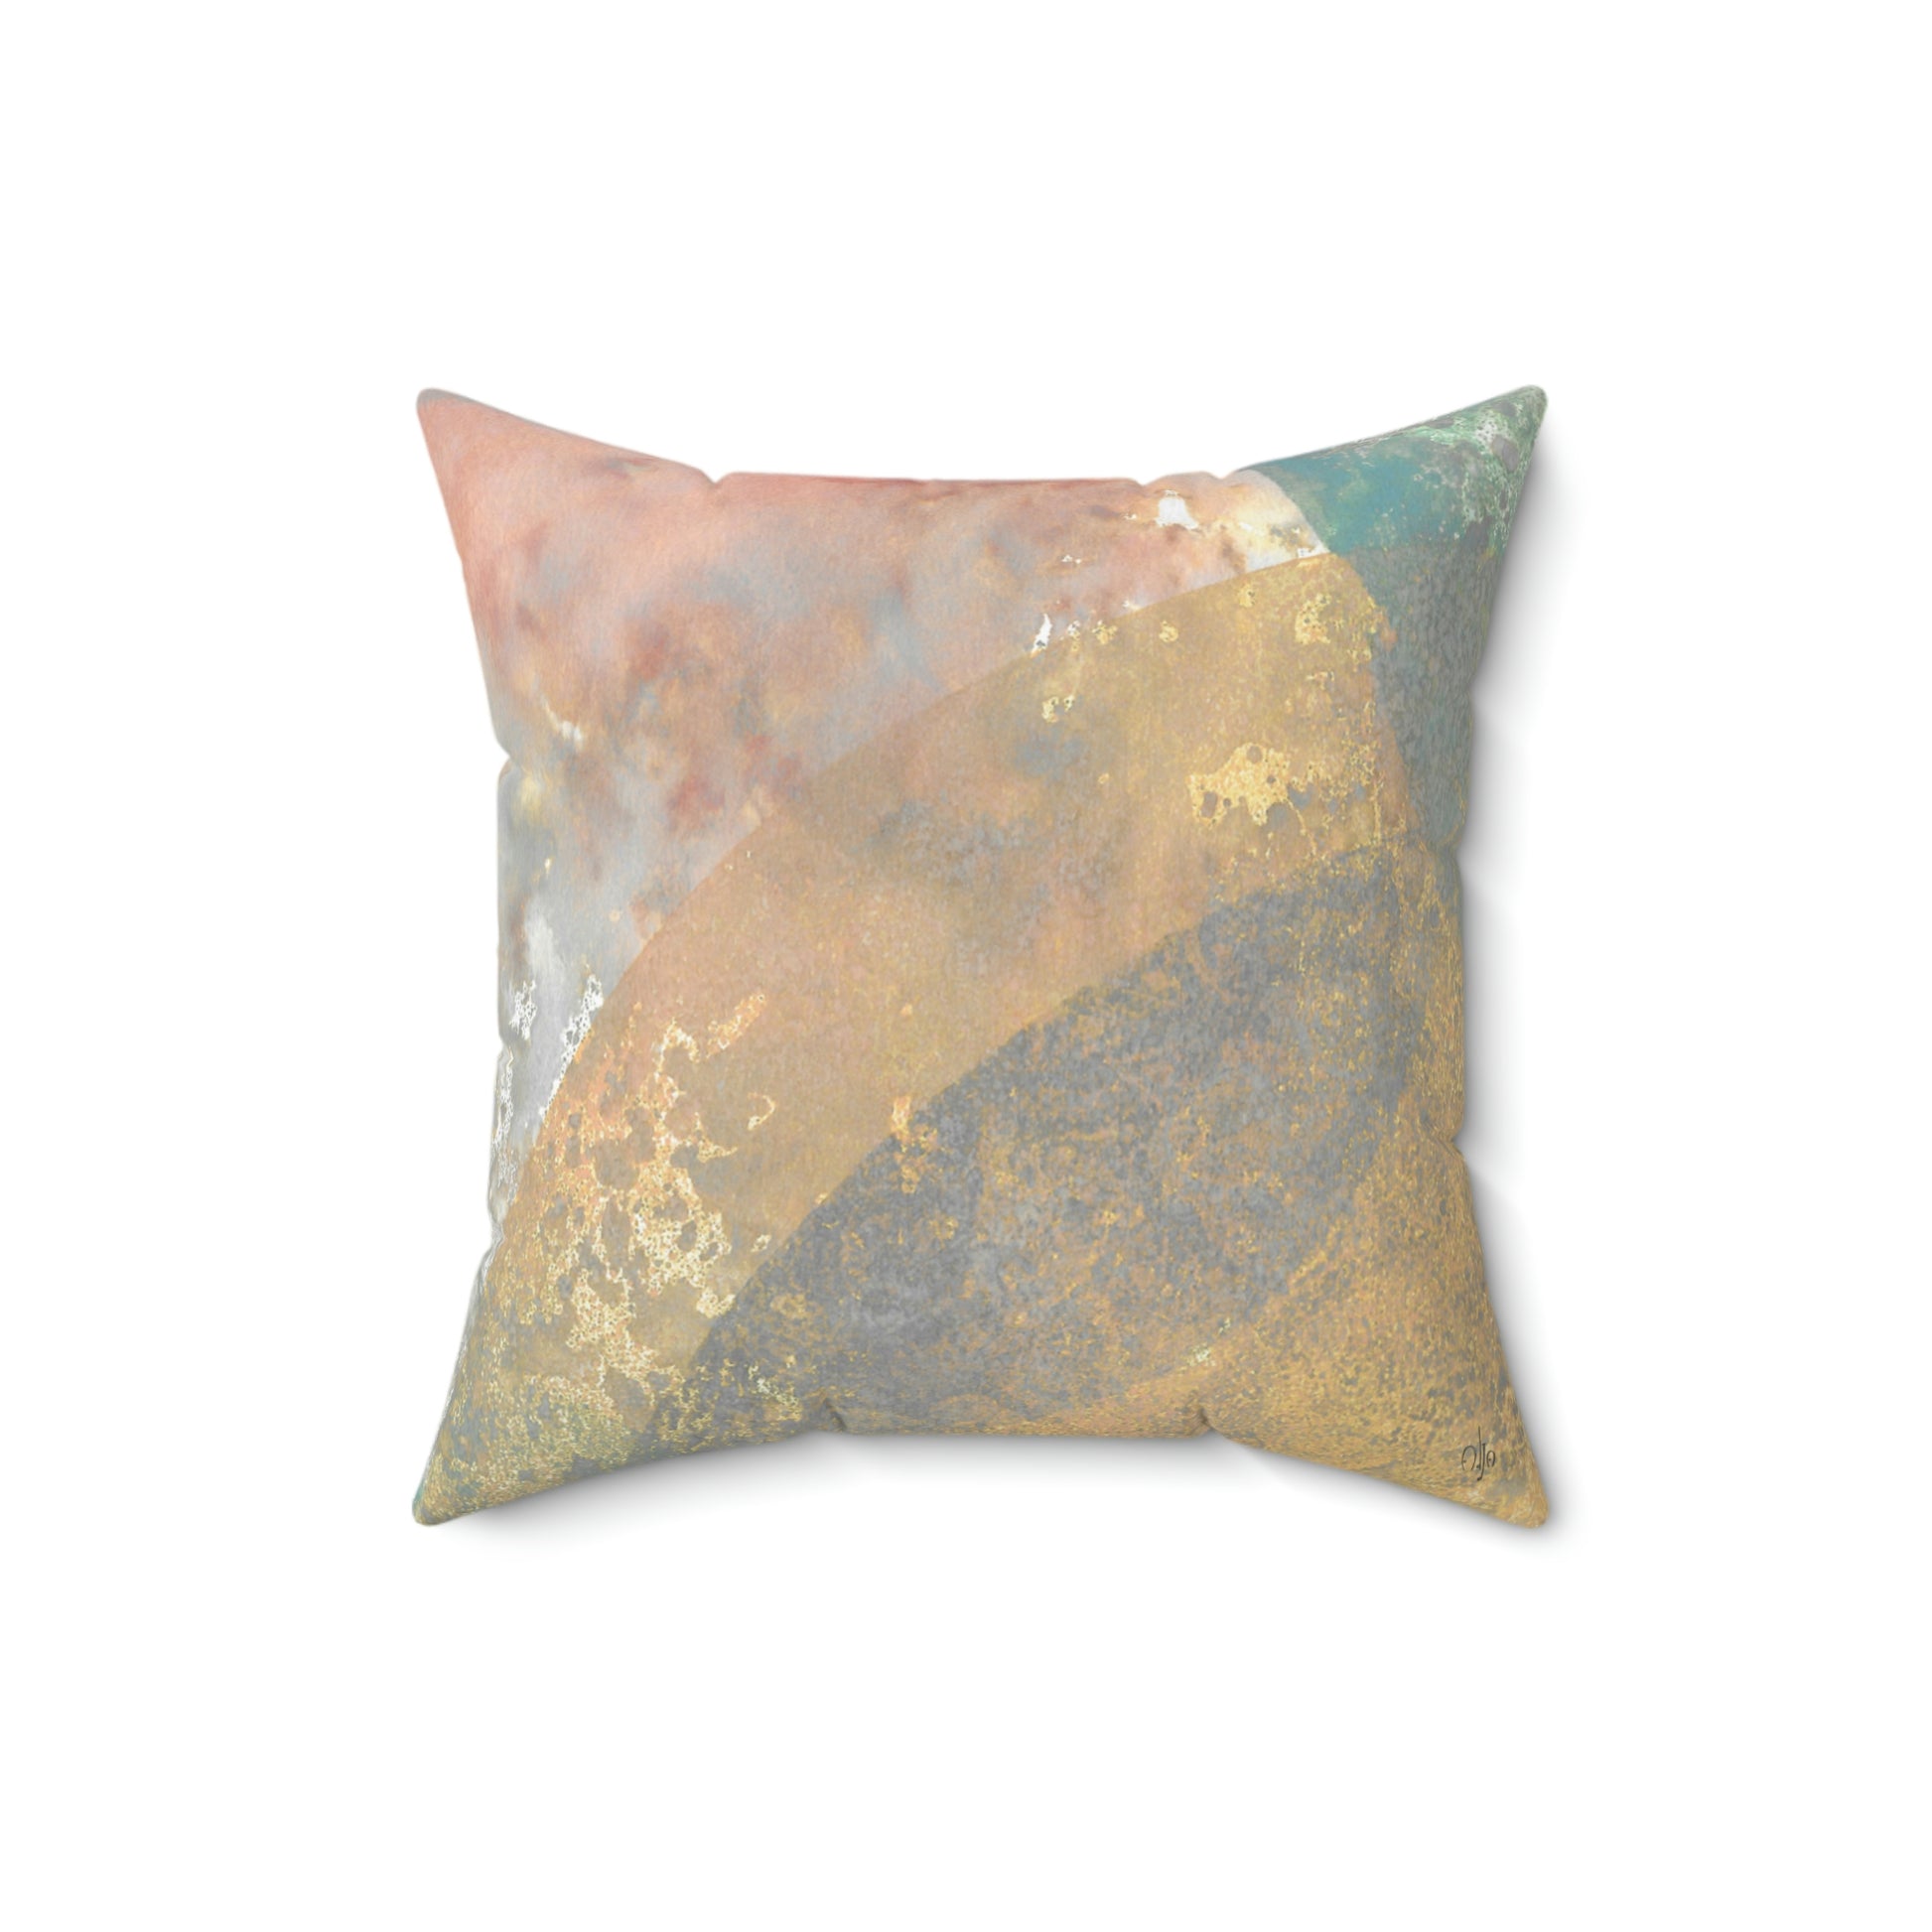 Dusty Sunset Square Pillow - Alja Design